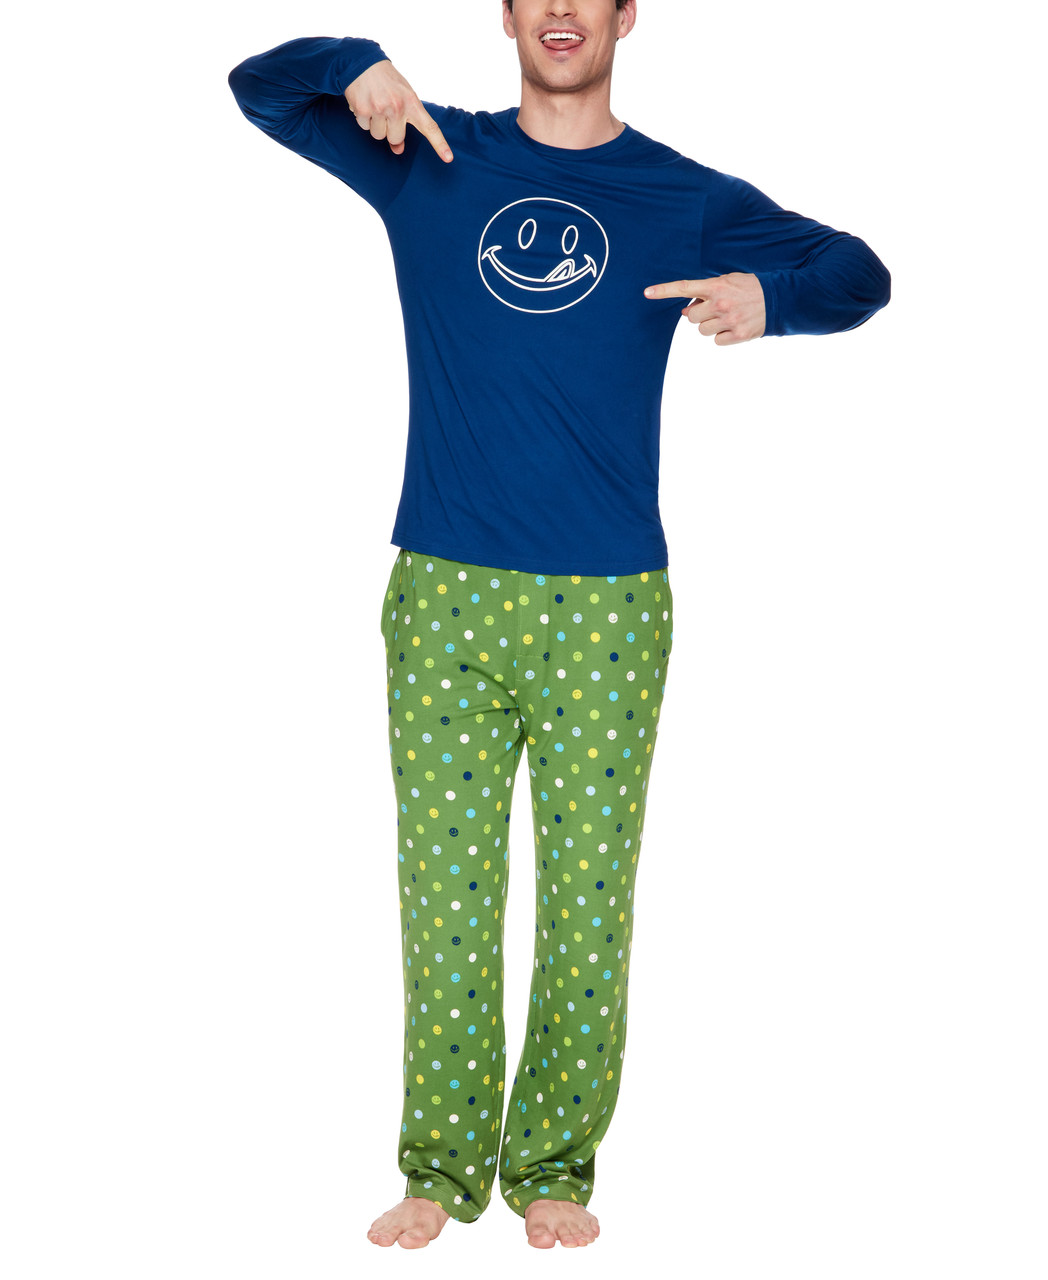 3-in-1 Sleepwear Pajama Set